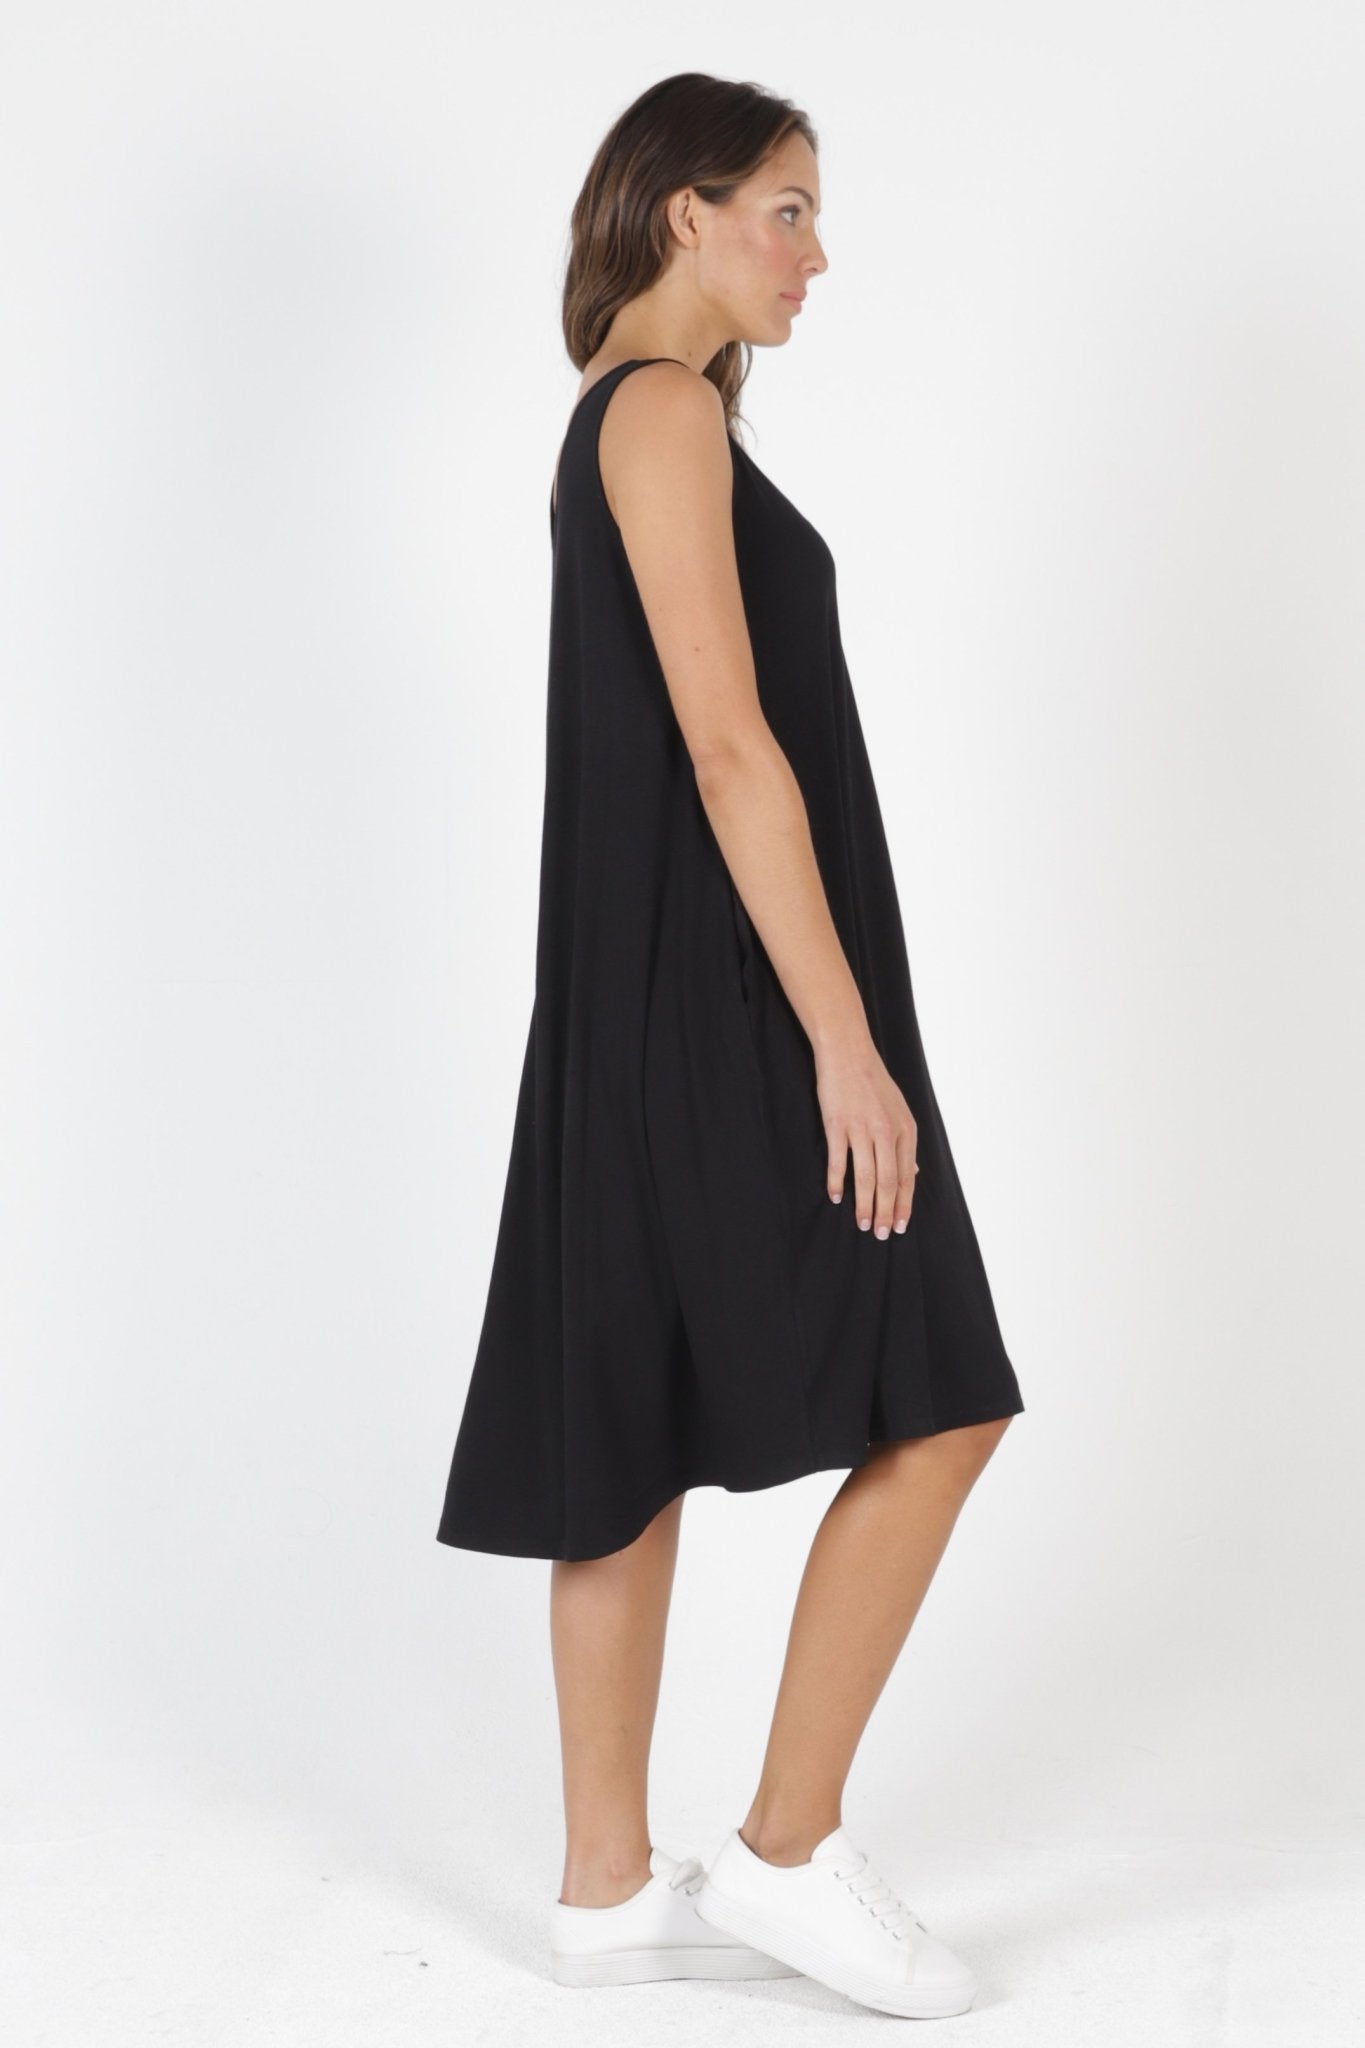 Betty Basics Oman Dress in Black - Hey Sara